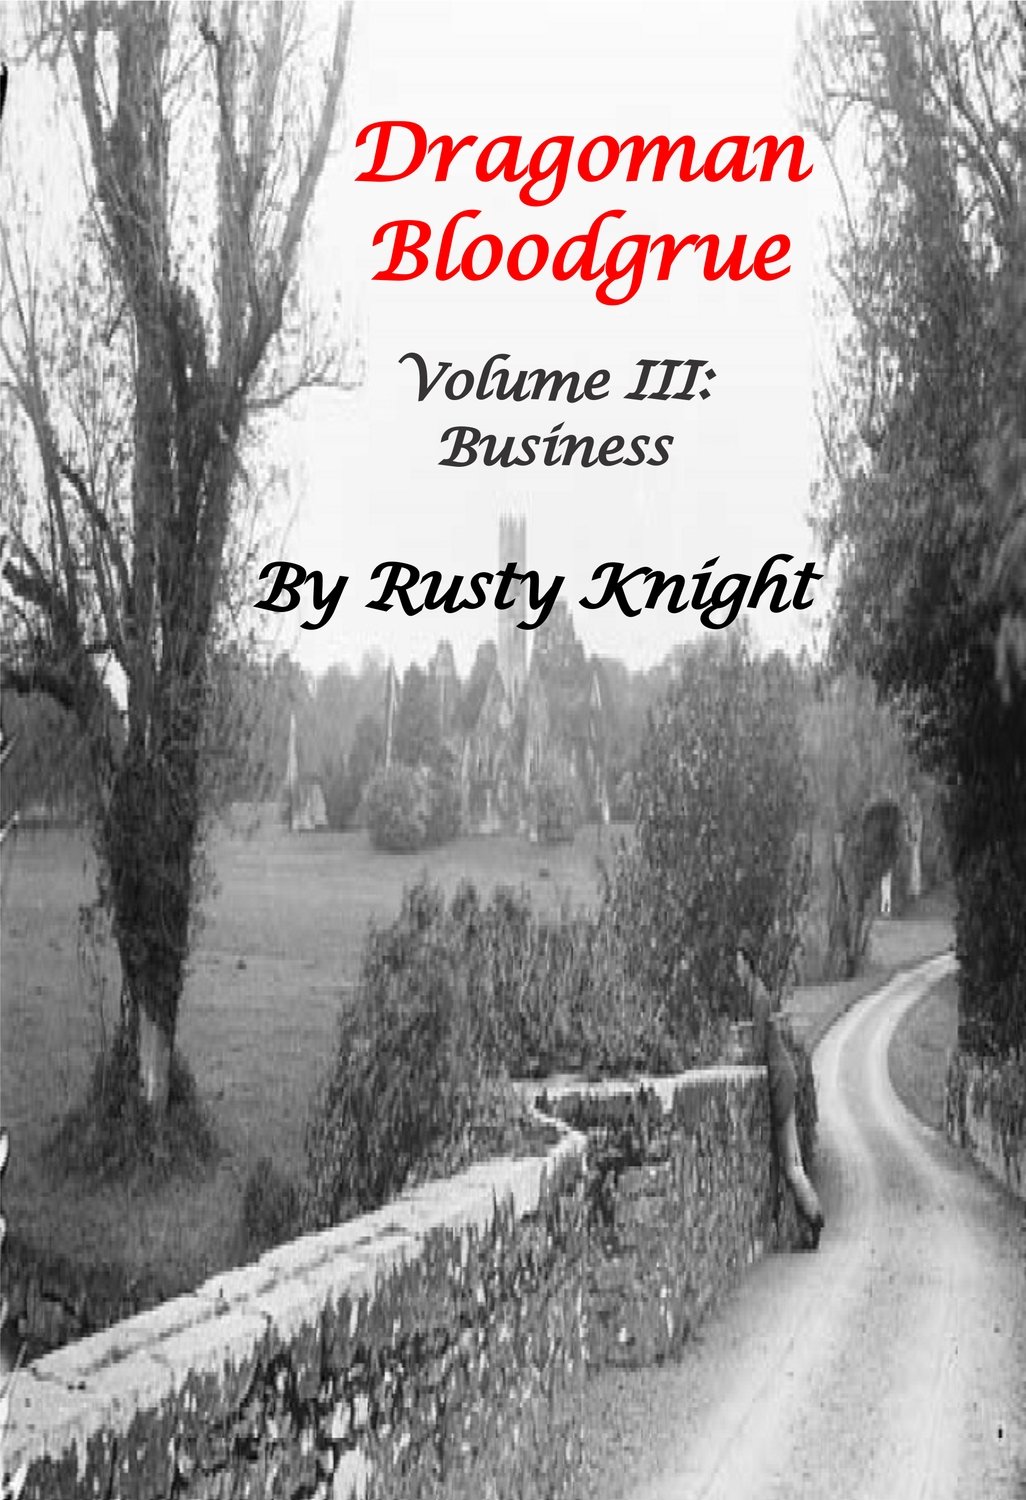 Dragoman Bloodgrue Volume III, Business, e-copy